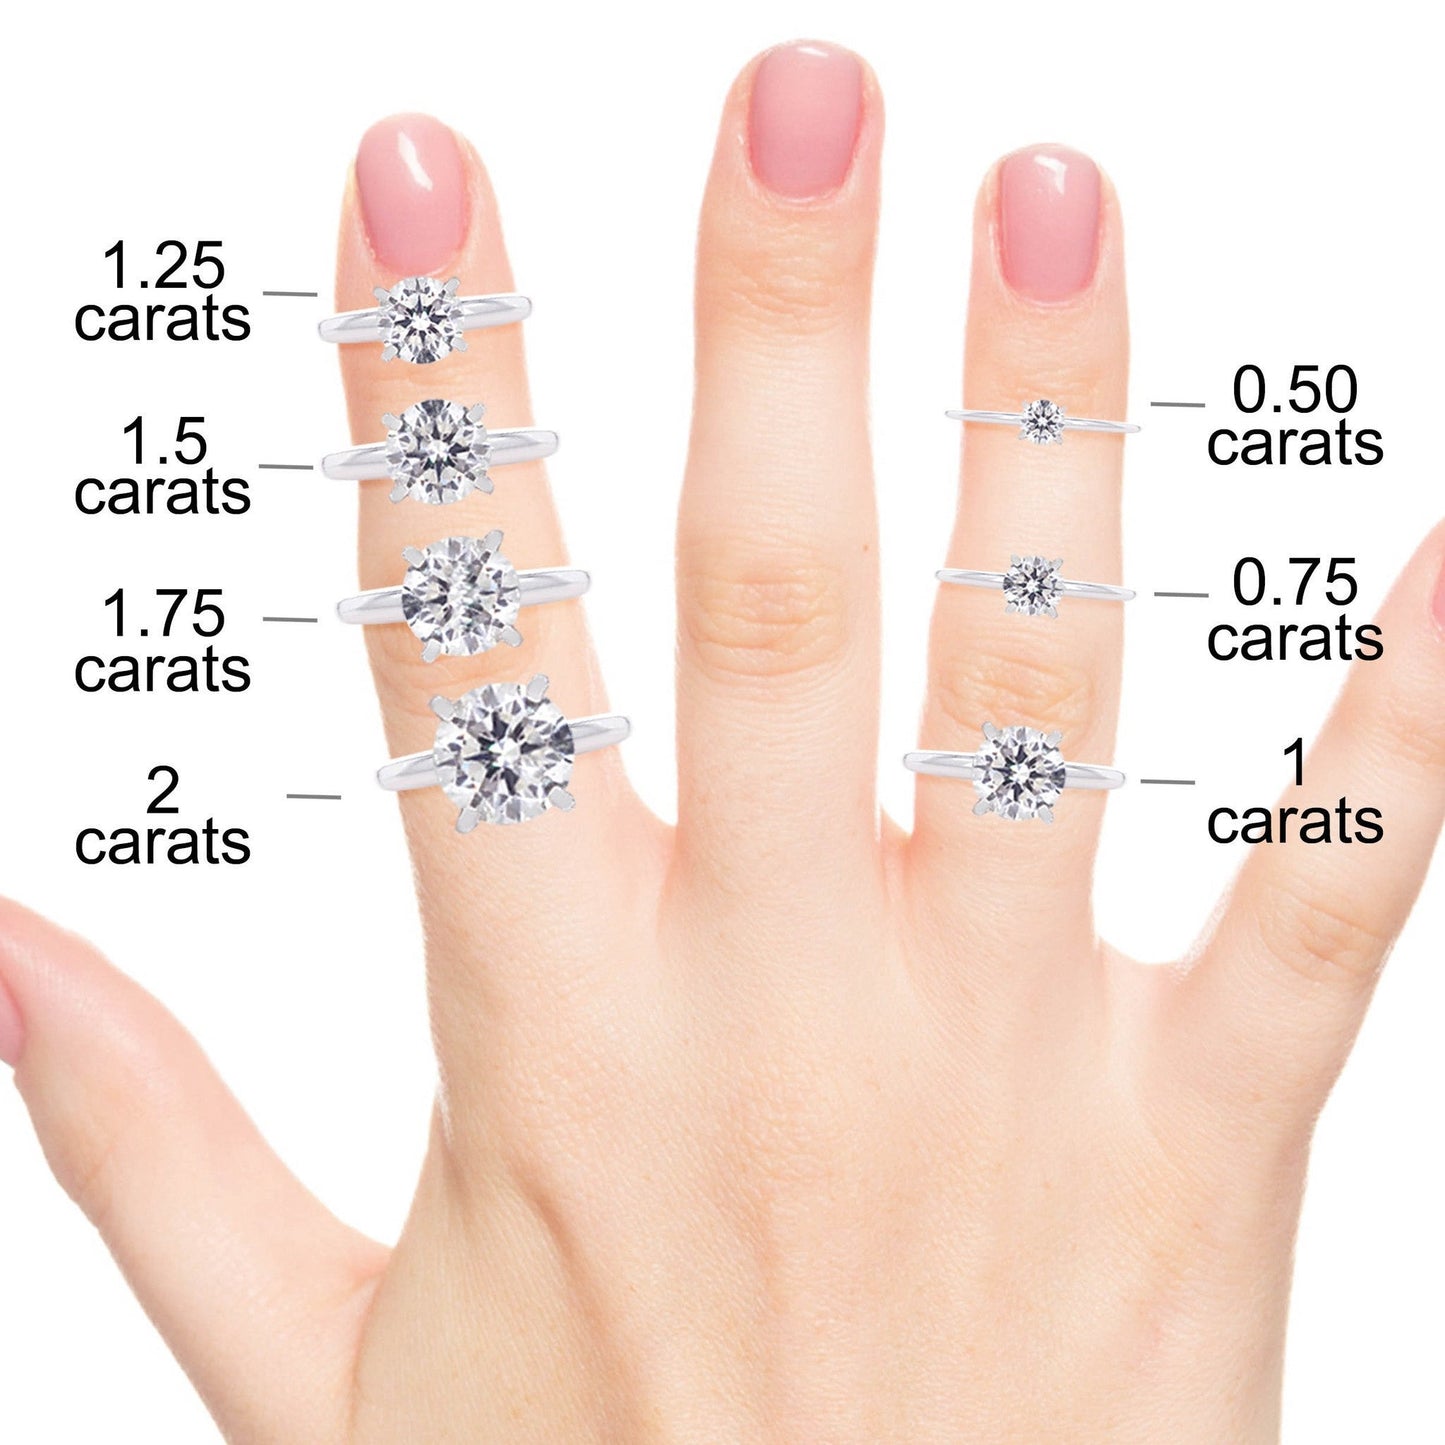 Three Stone Princess Cut Diamond Engagement Ring Enchantment Lattice 14K White Gold engagement rings imaginediamonds 